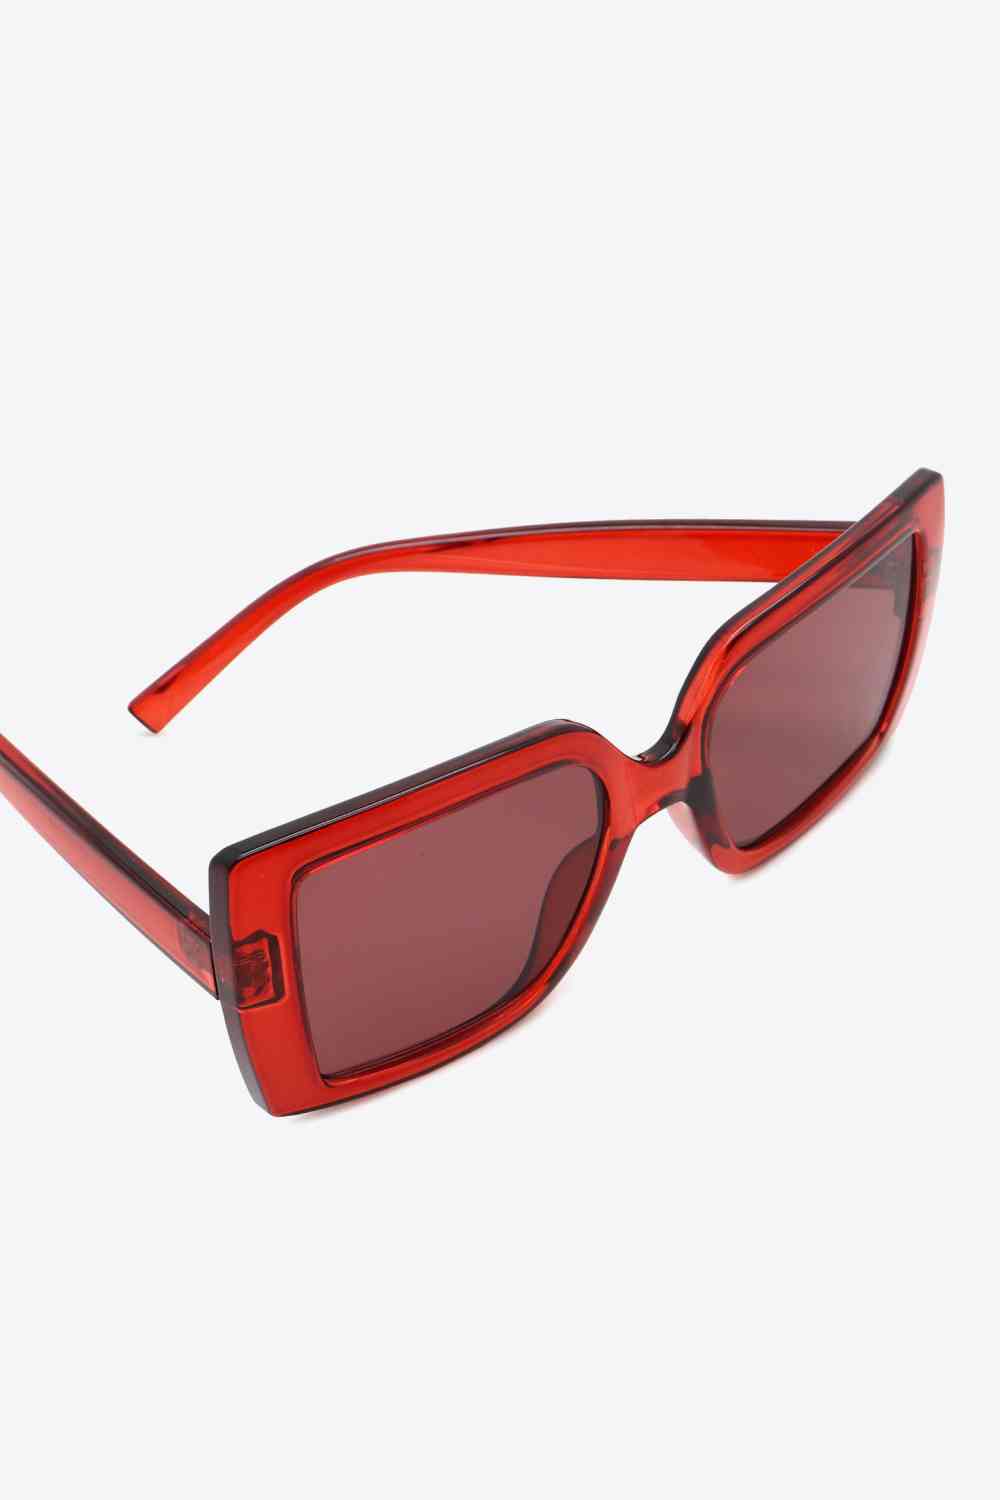 TEEK - Deep Red Square Sunglasses EYEGLASSES TEEK Trend   